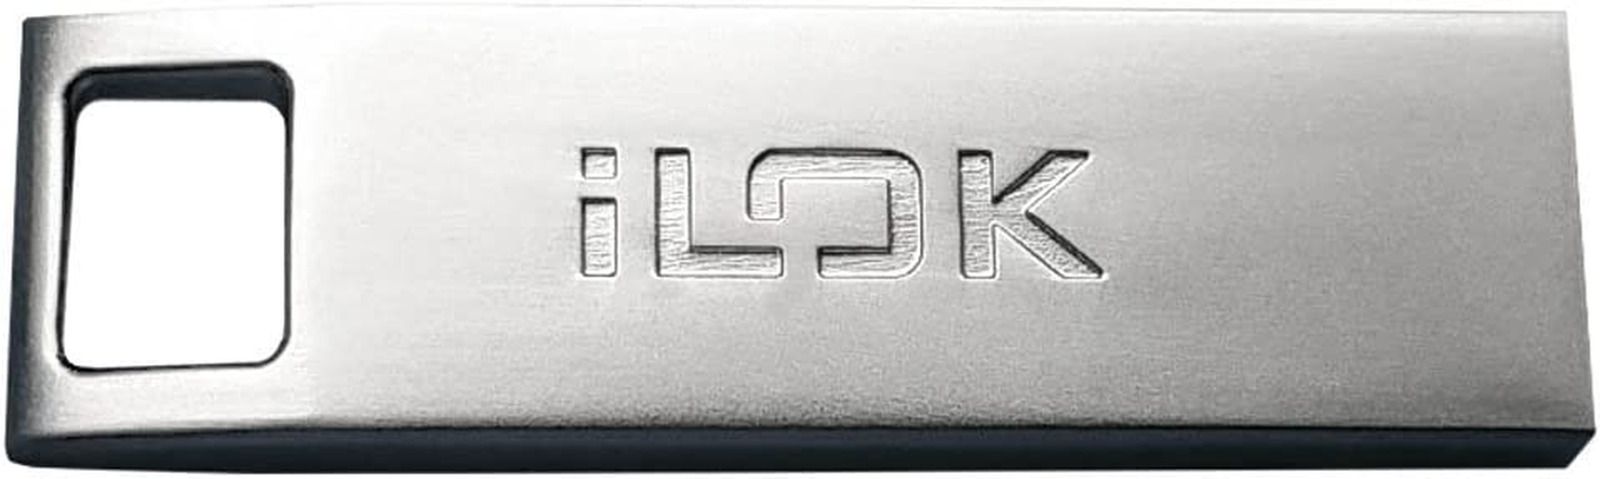 PACE Ilok3 USB Key Software Authorization Device (99007120900)